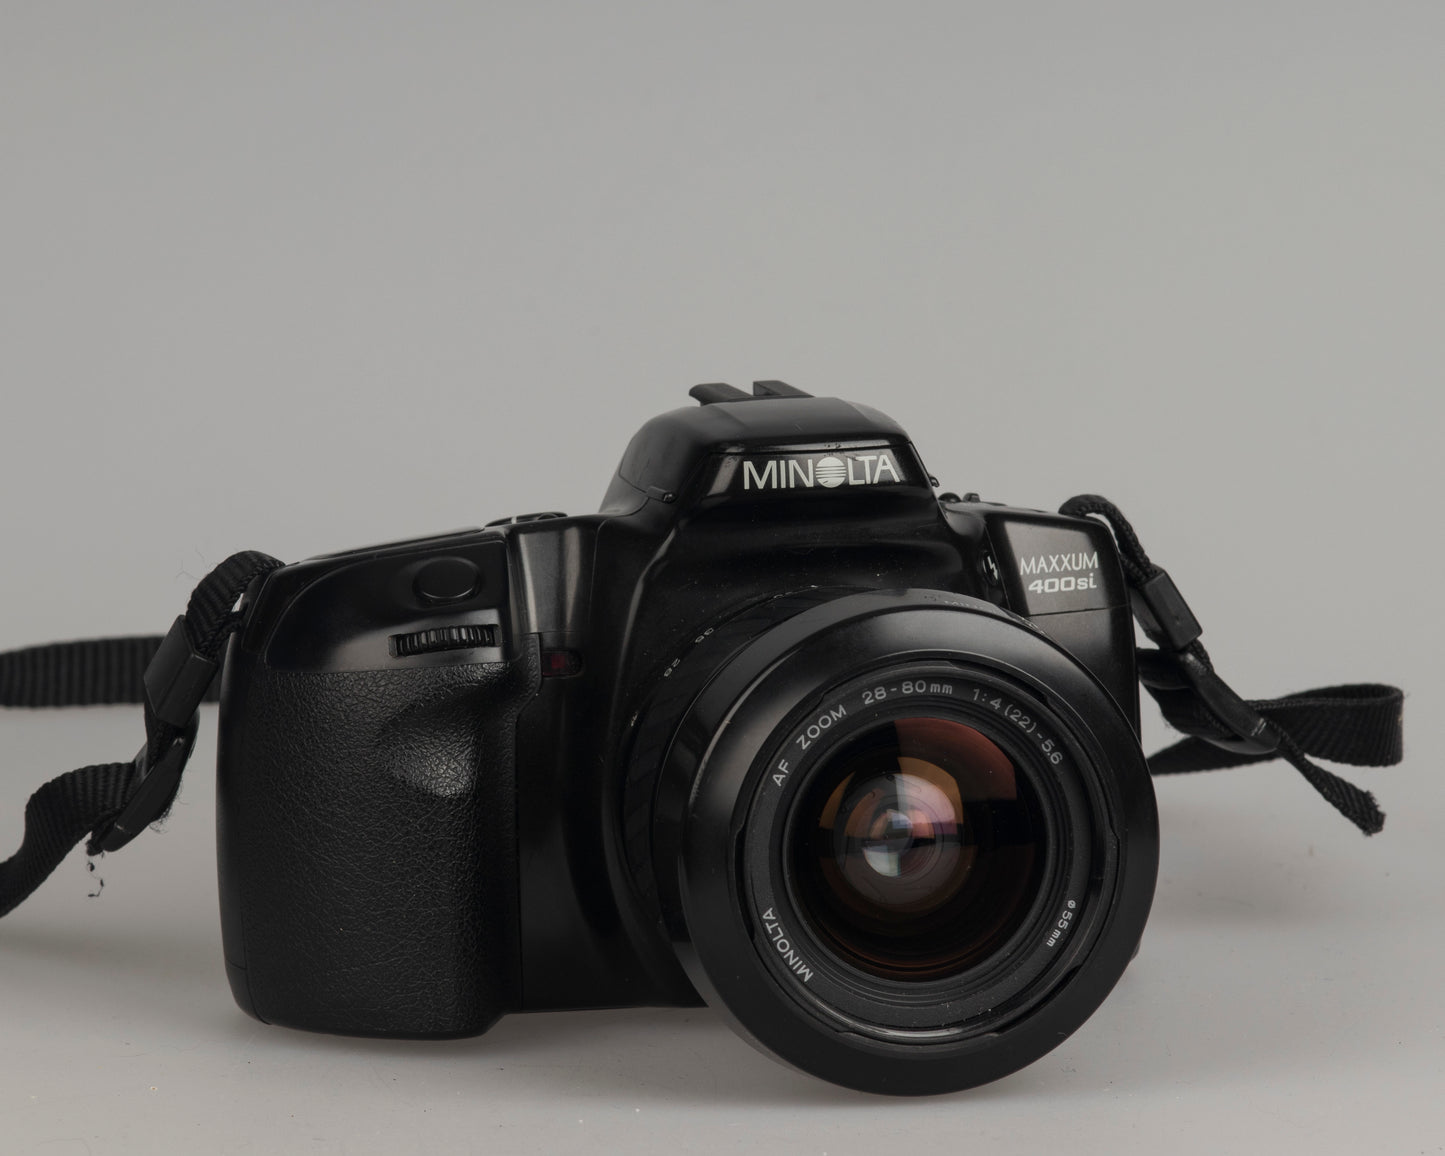 Minolta Maxxum 400si 35mm film SLR camera featuring a 28-80mm lens